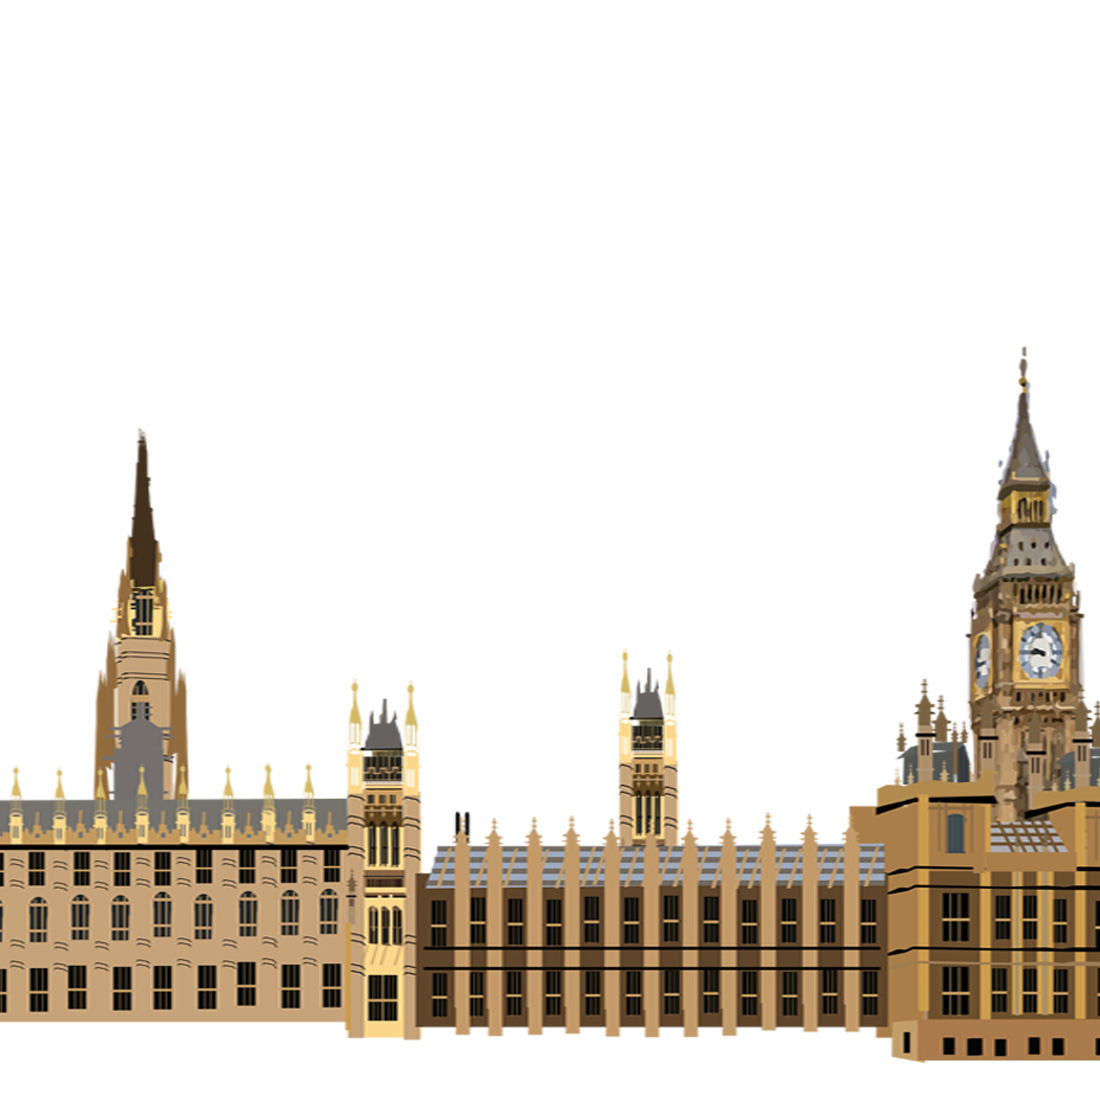 Parliament of England preview image.